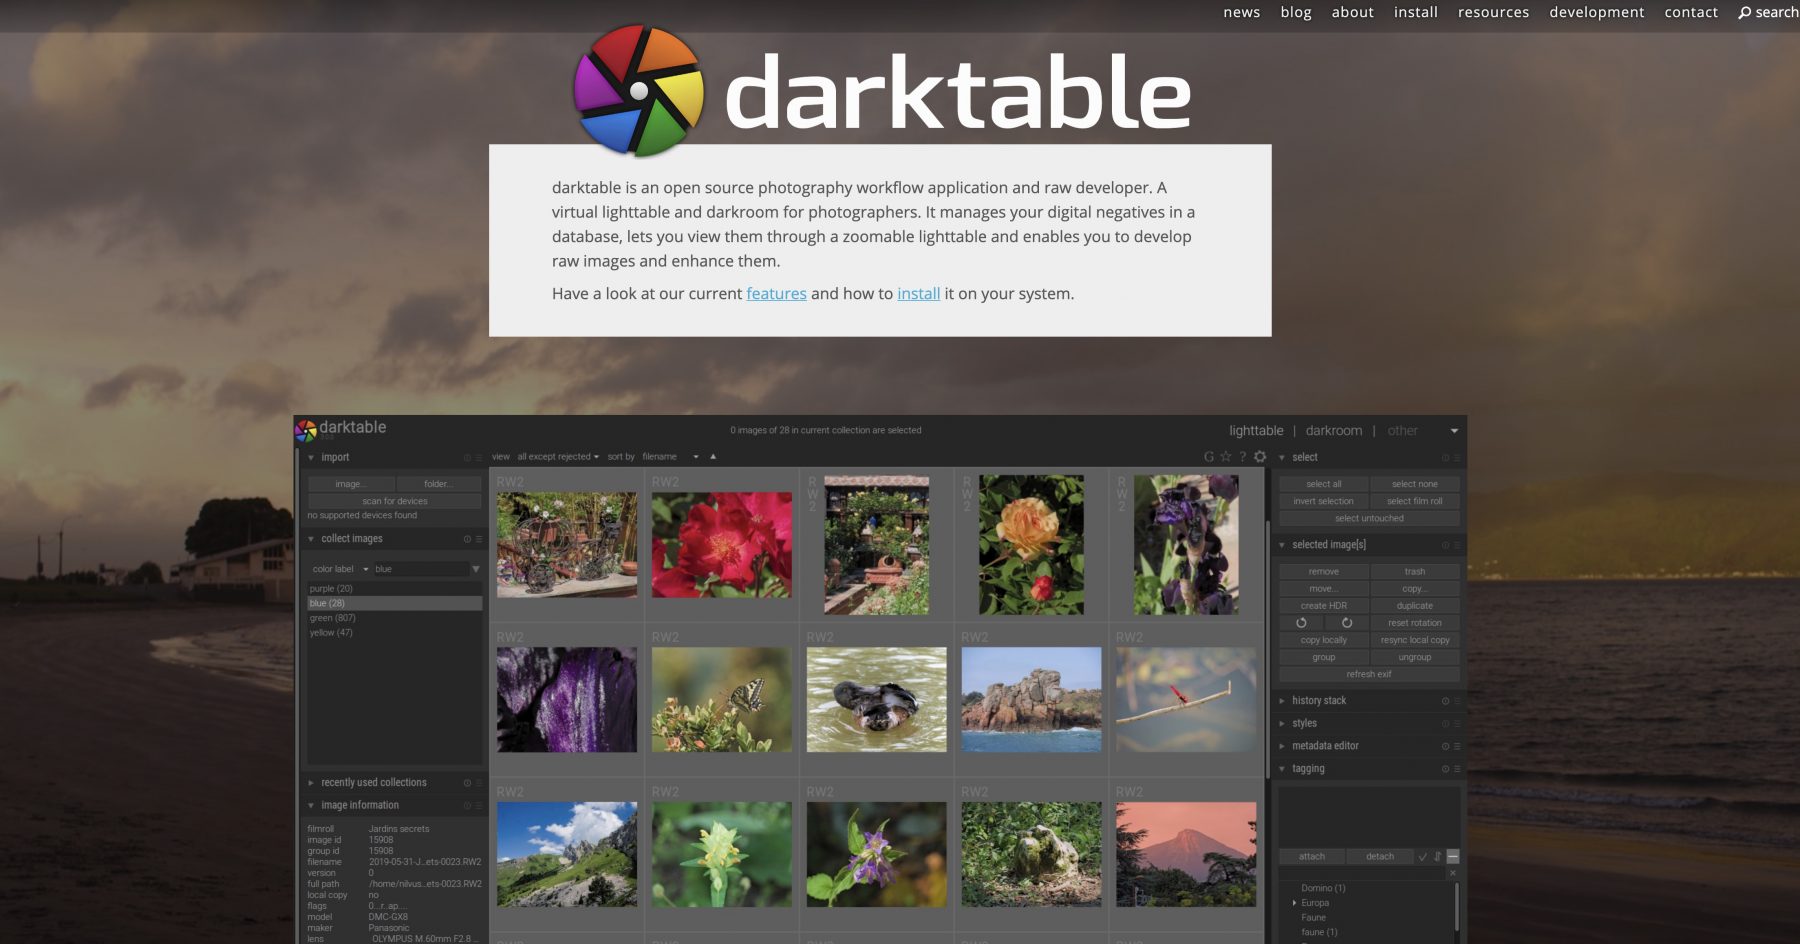 darktable 4.4.0 download the last version for mac